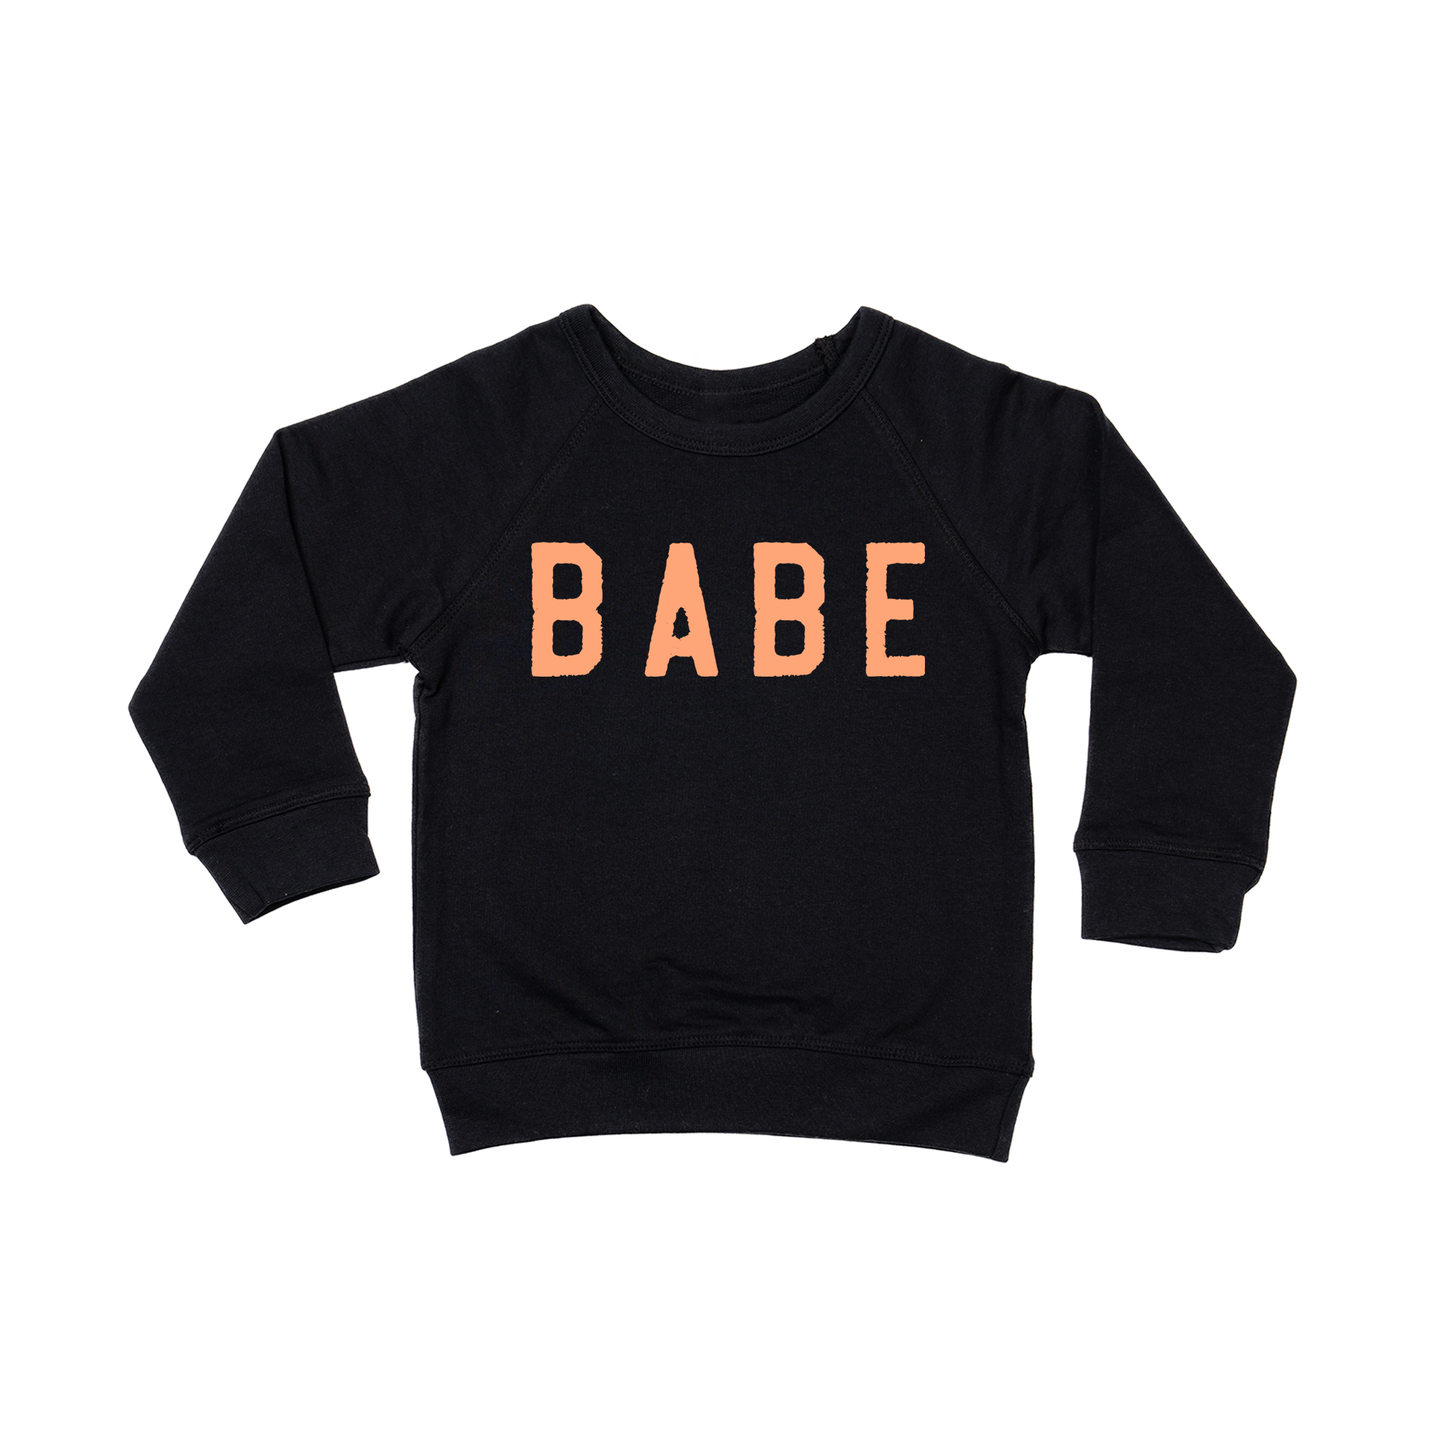 BABE (Rough, Peach) - Kids Sweatshirt (Black)